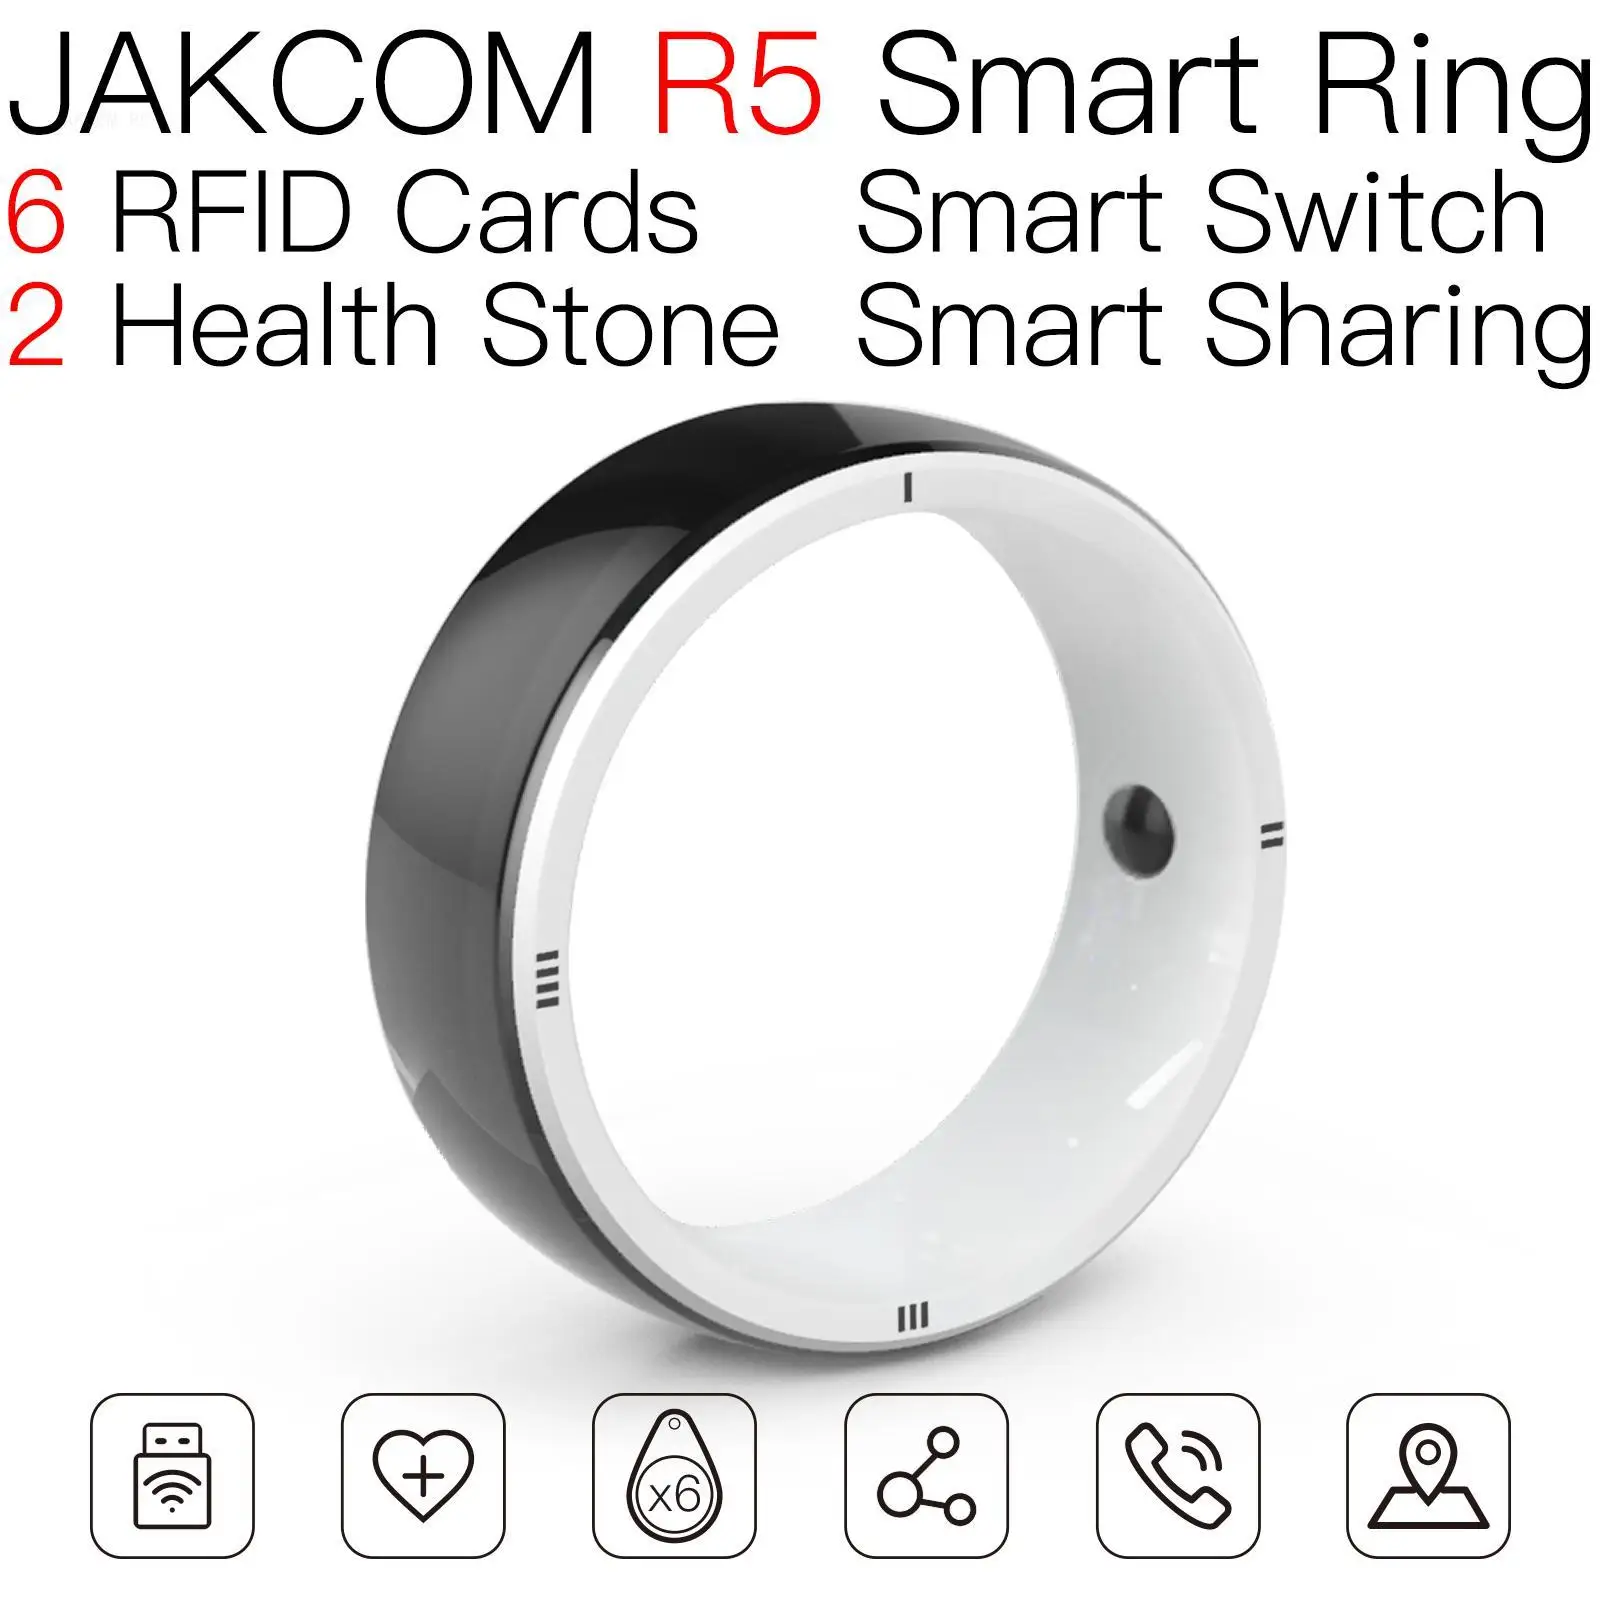 

JAKCOM R5 Smart Ring Super value as badges rfid jeton nm card uid human chip immo off nfc em4100 1000pcs cable 50 ohms uhf